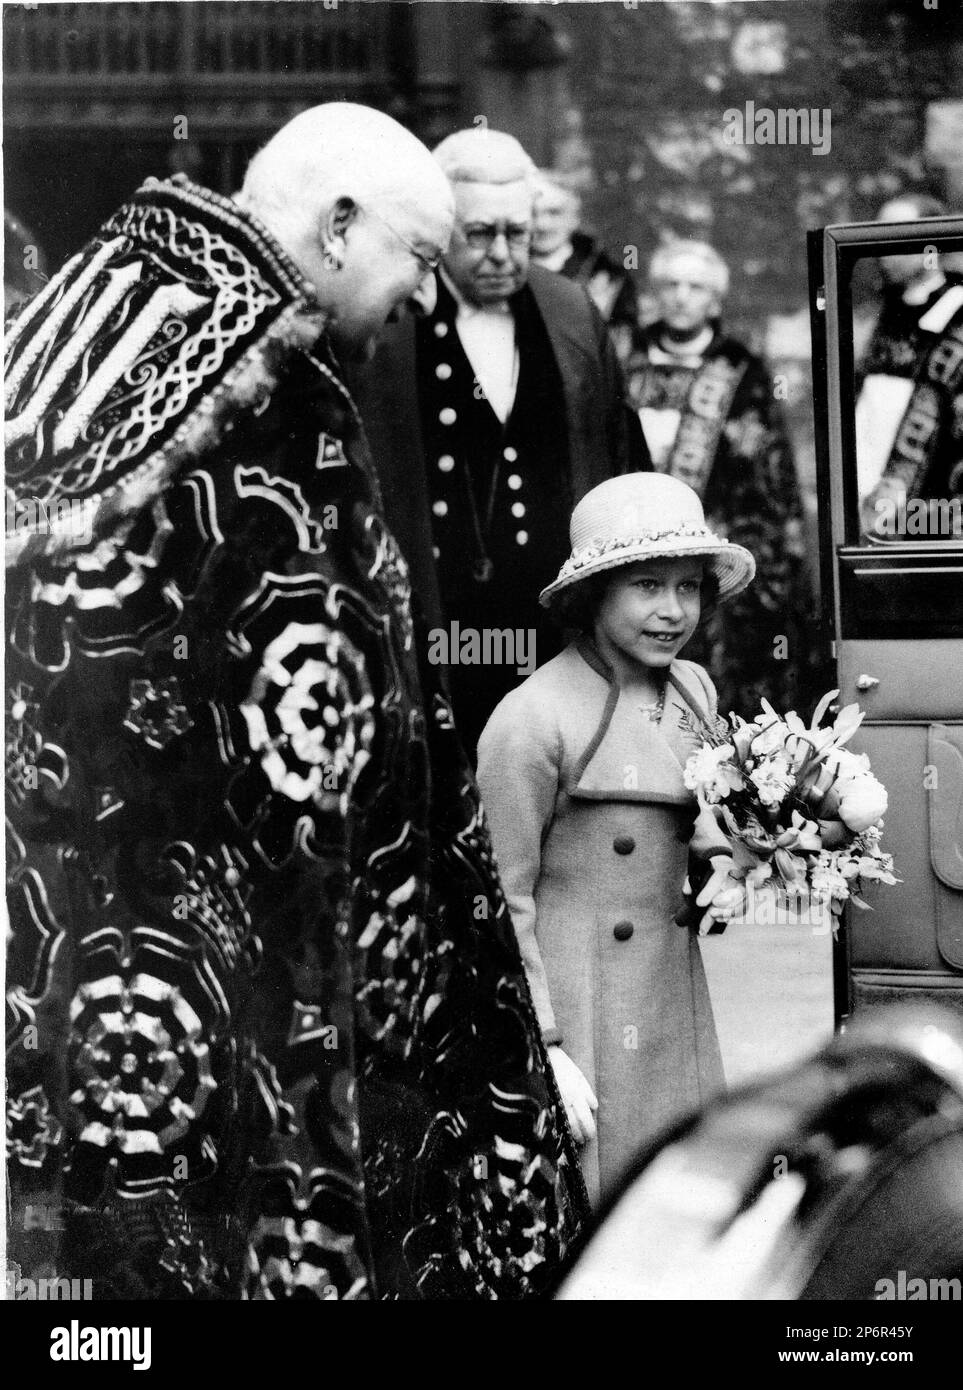 1935 , 18 april , London , GREAT BRITAIN : The princess  ELIZABETH ( future Queen ELIZABETH II of England ,  born 1926 ),  performed the ceremony of distributing Neundy Thursday money at Westminster Abbey , in this photo with the Bishop of Canterbury  .- REALI - ROYALTY - nobili - nobiltà - nobility - GRAND BRETAGNA - GREAT BRITAIN - INGHILTERRA - REGINA - WINDSOR - House of Saxe-Coburg-Gotha - celebrity personality celebrities personalities when was young little child children - celebrità personalità da giovani giovane piccoli piccoli bambini bambino bambina - hat - cappello   ---- Archivio G Stock Photo